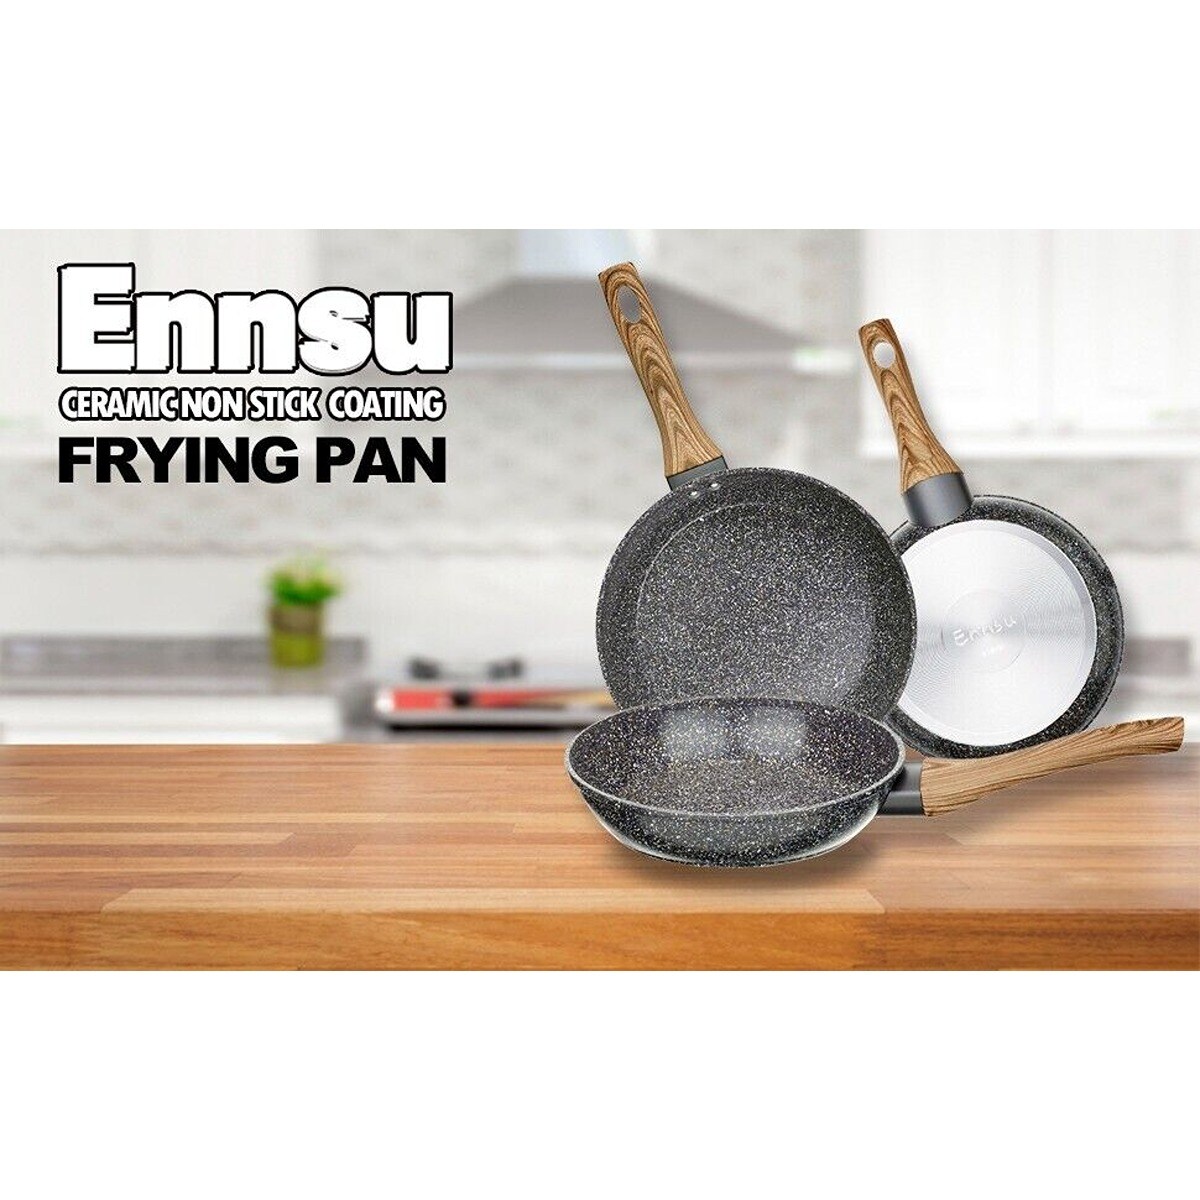 Ceramic Nonstick Coating Frying Pan 3 pcs